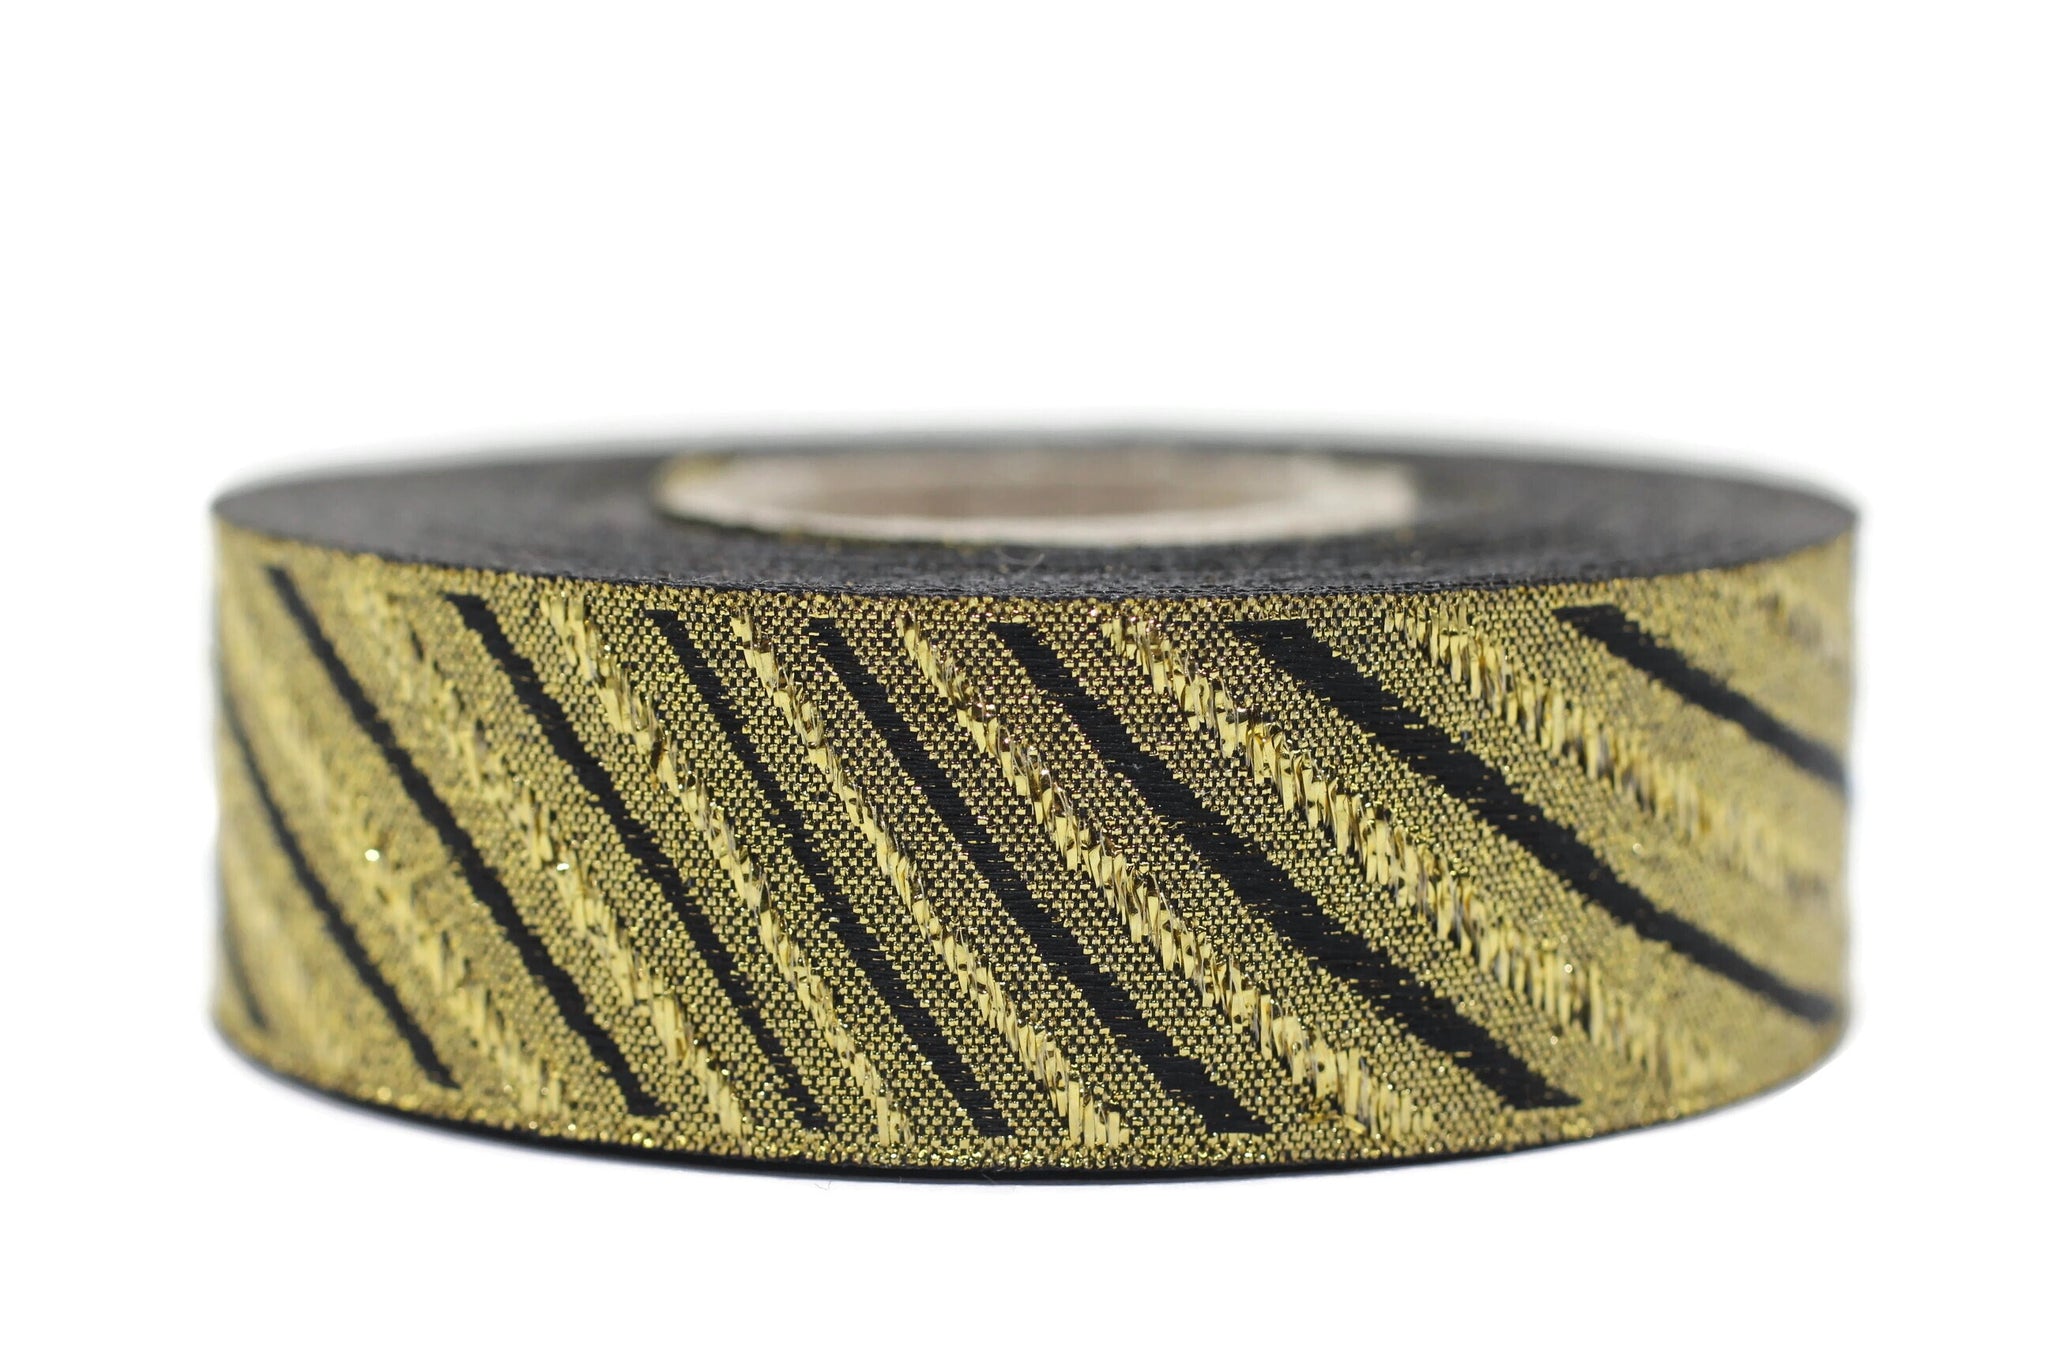 22 mm Gold/Black Jacquard ribbons 0.86 inches, Wavy Jacquard trim, Sewing trim, Jacquard ribbons, woven ribbons, dog collars, 22340